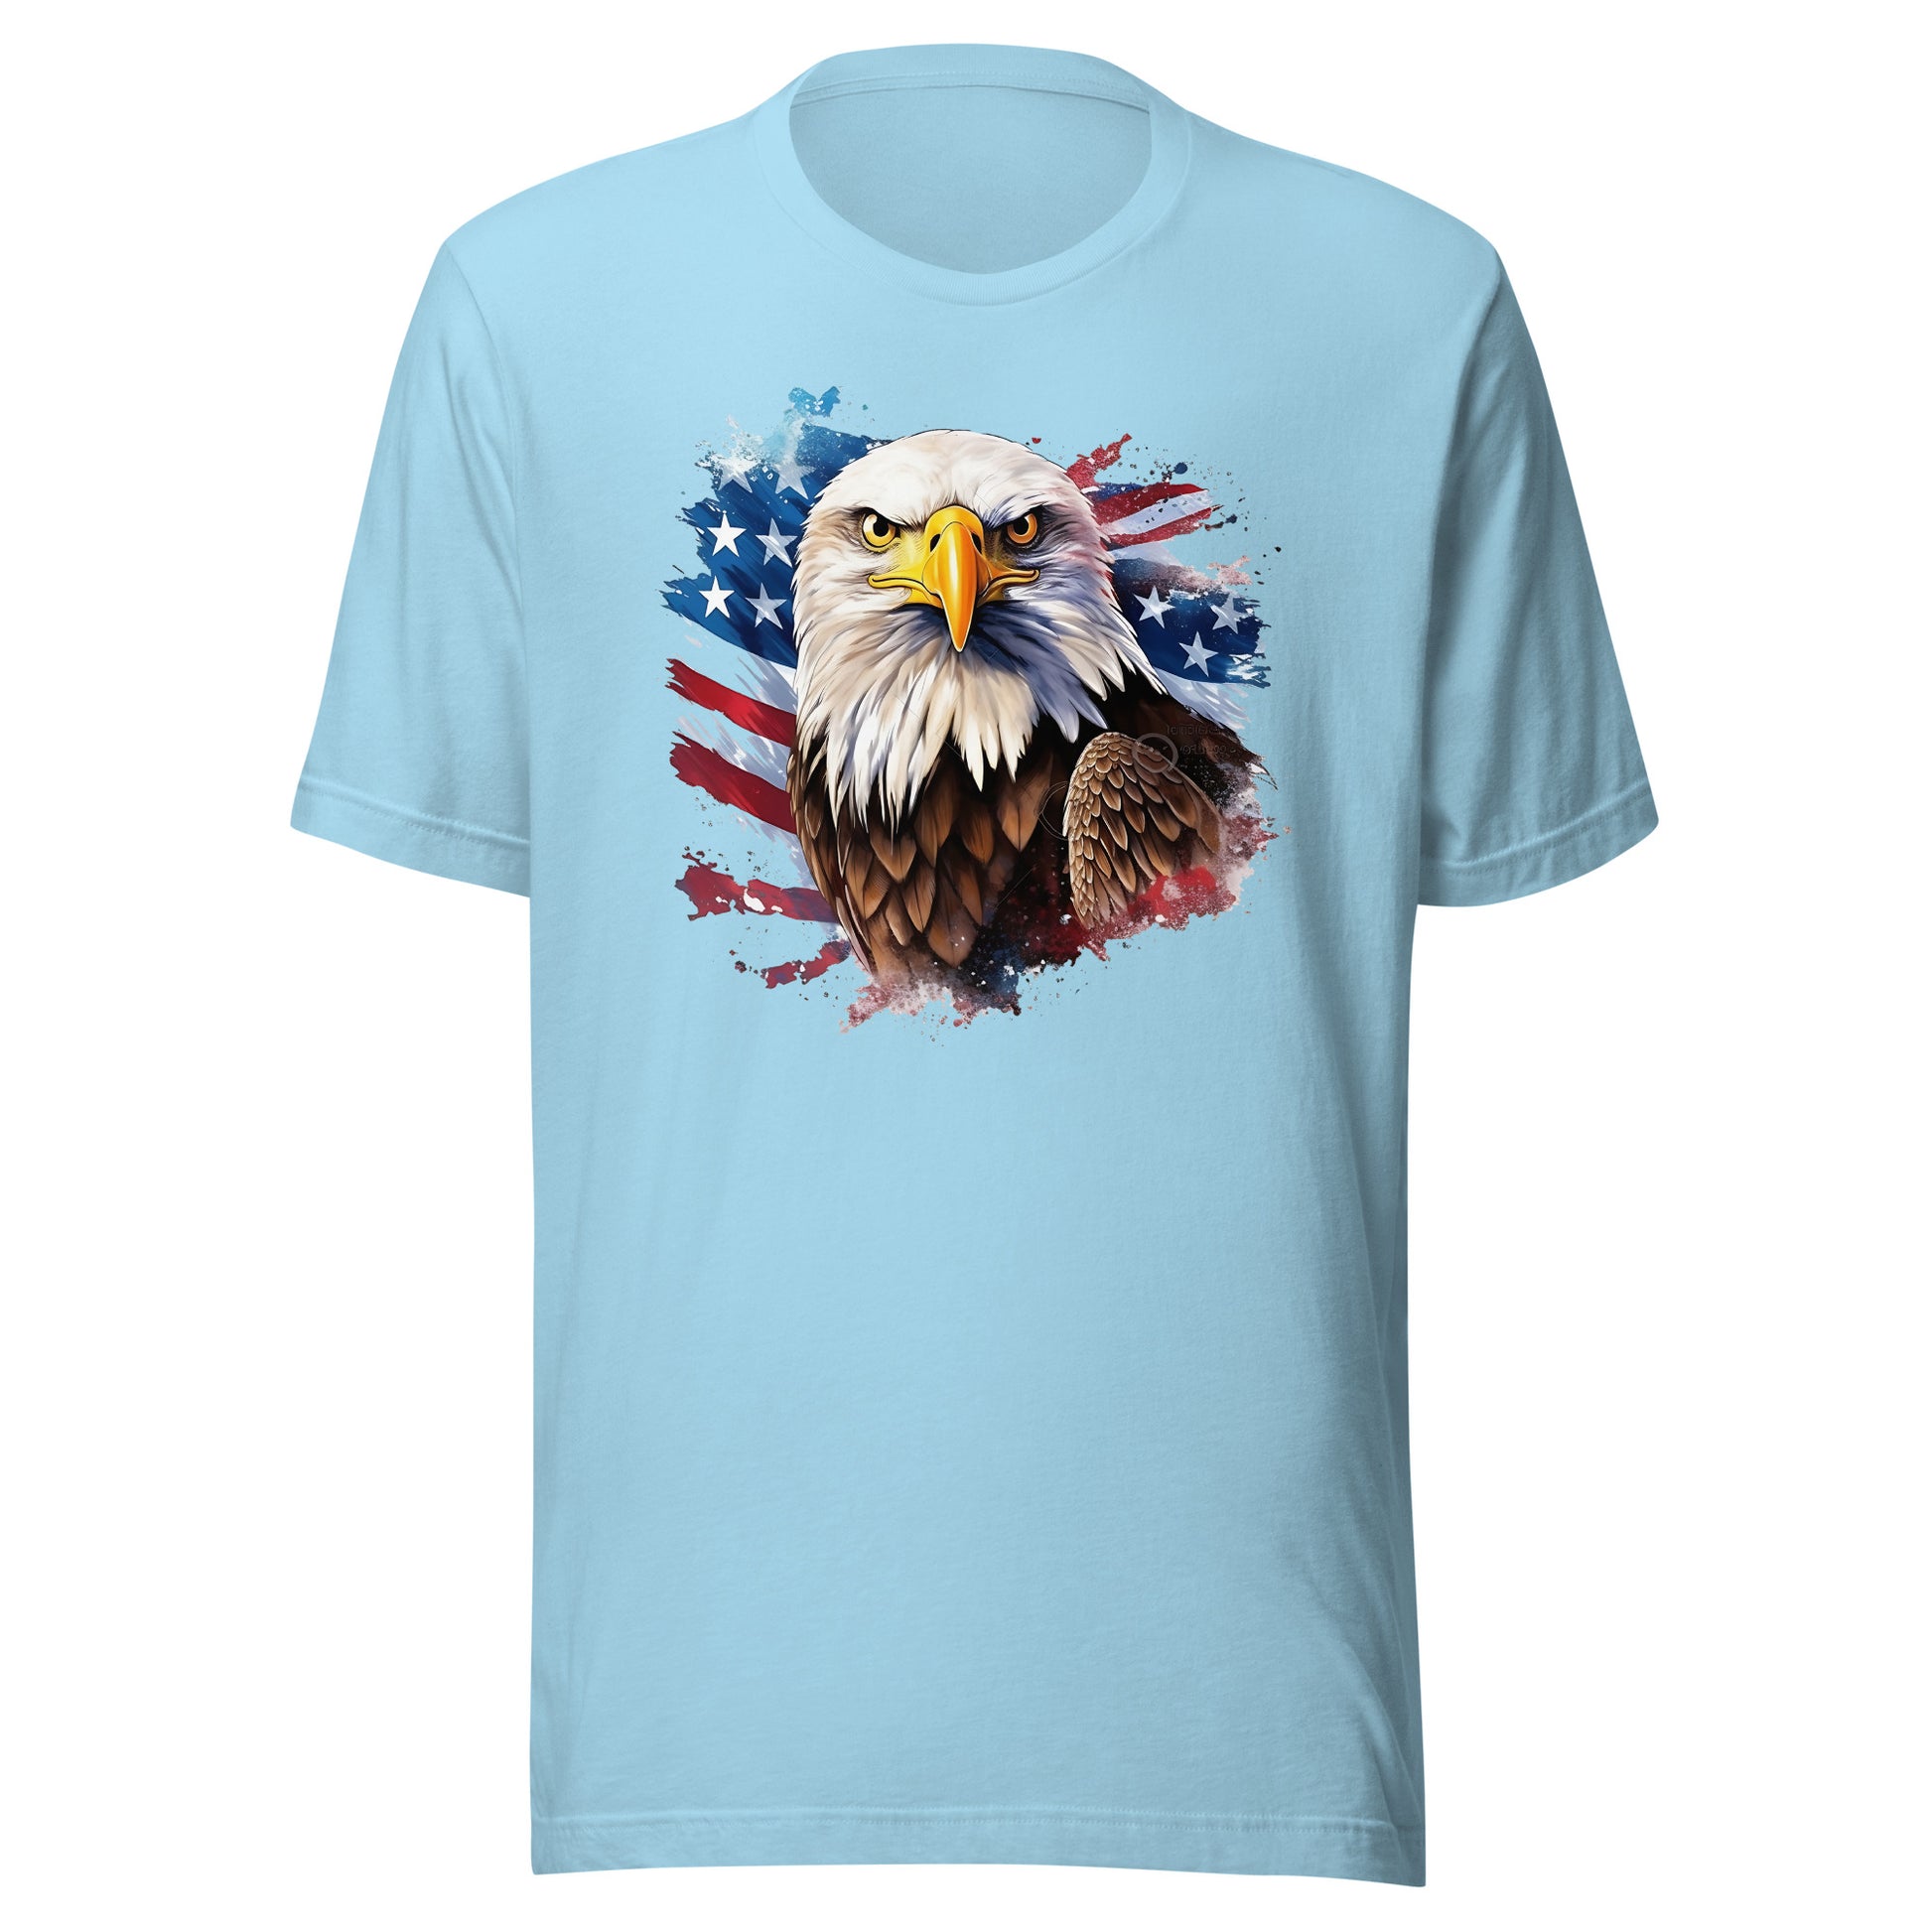 Blue Color Patriotic American Eagle T-shirt